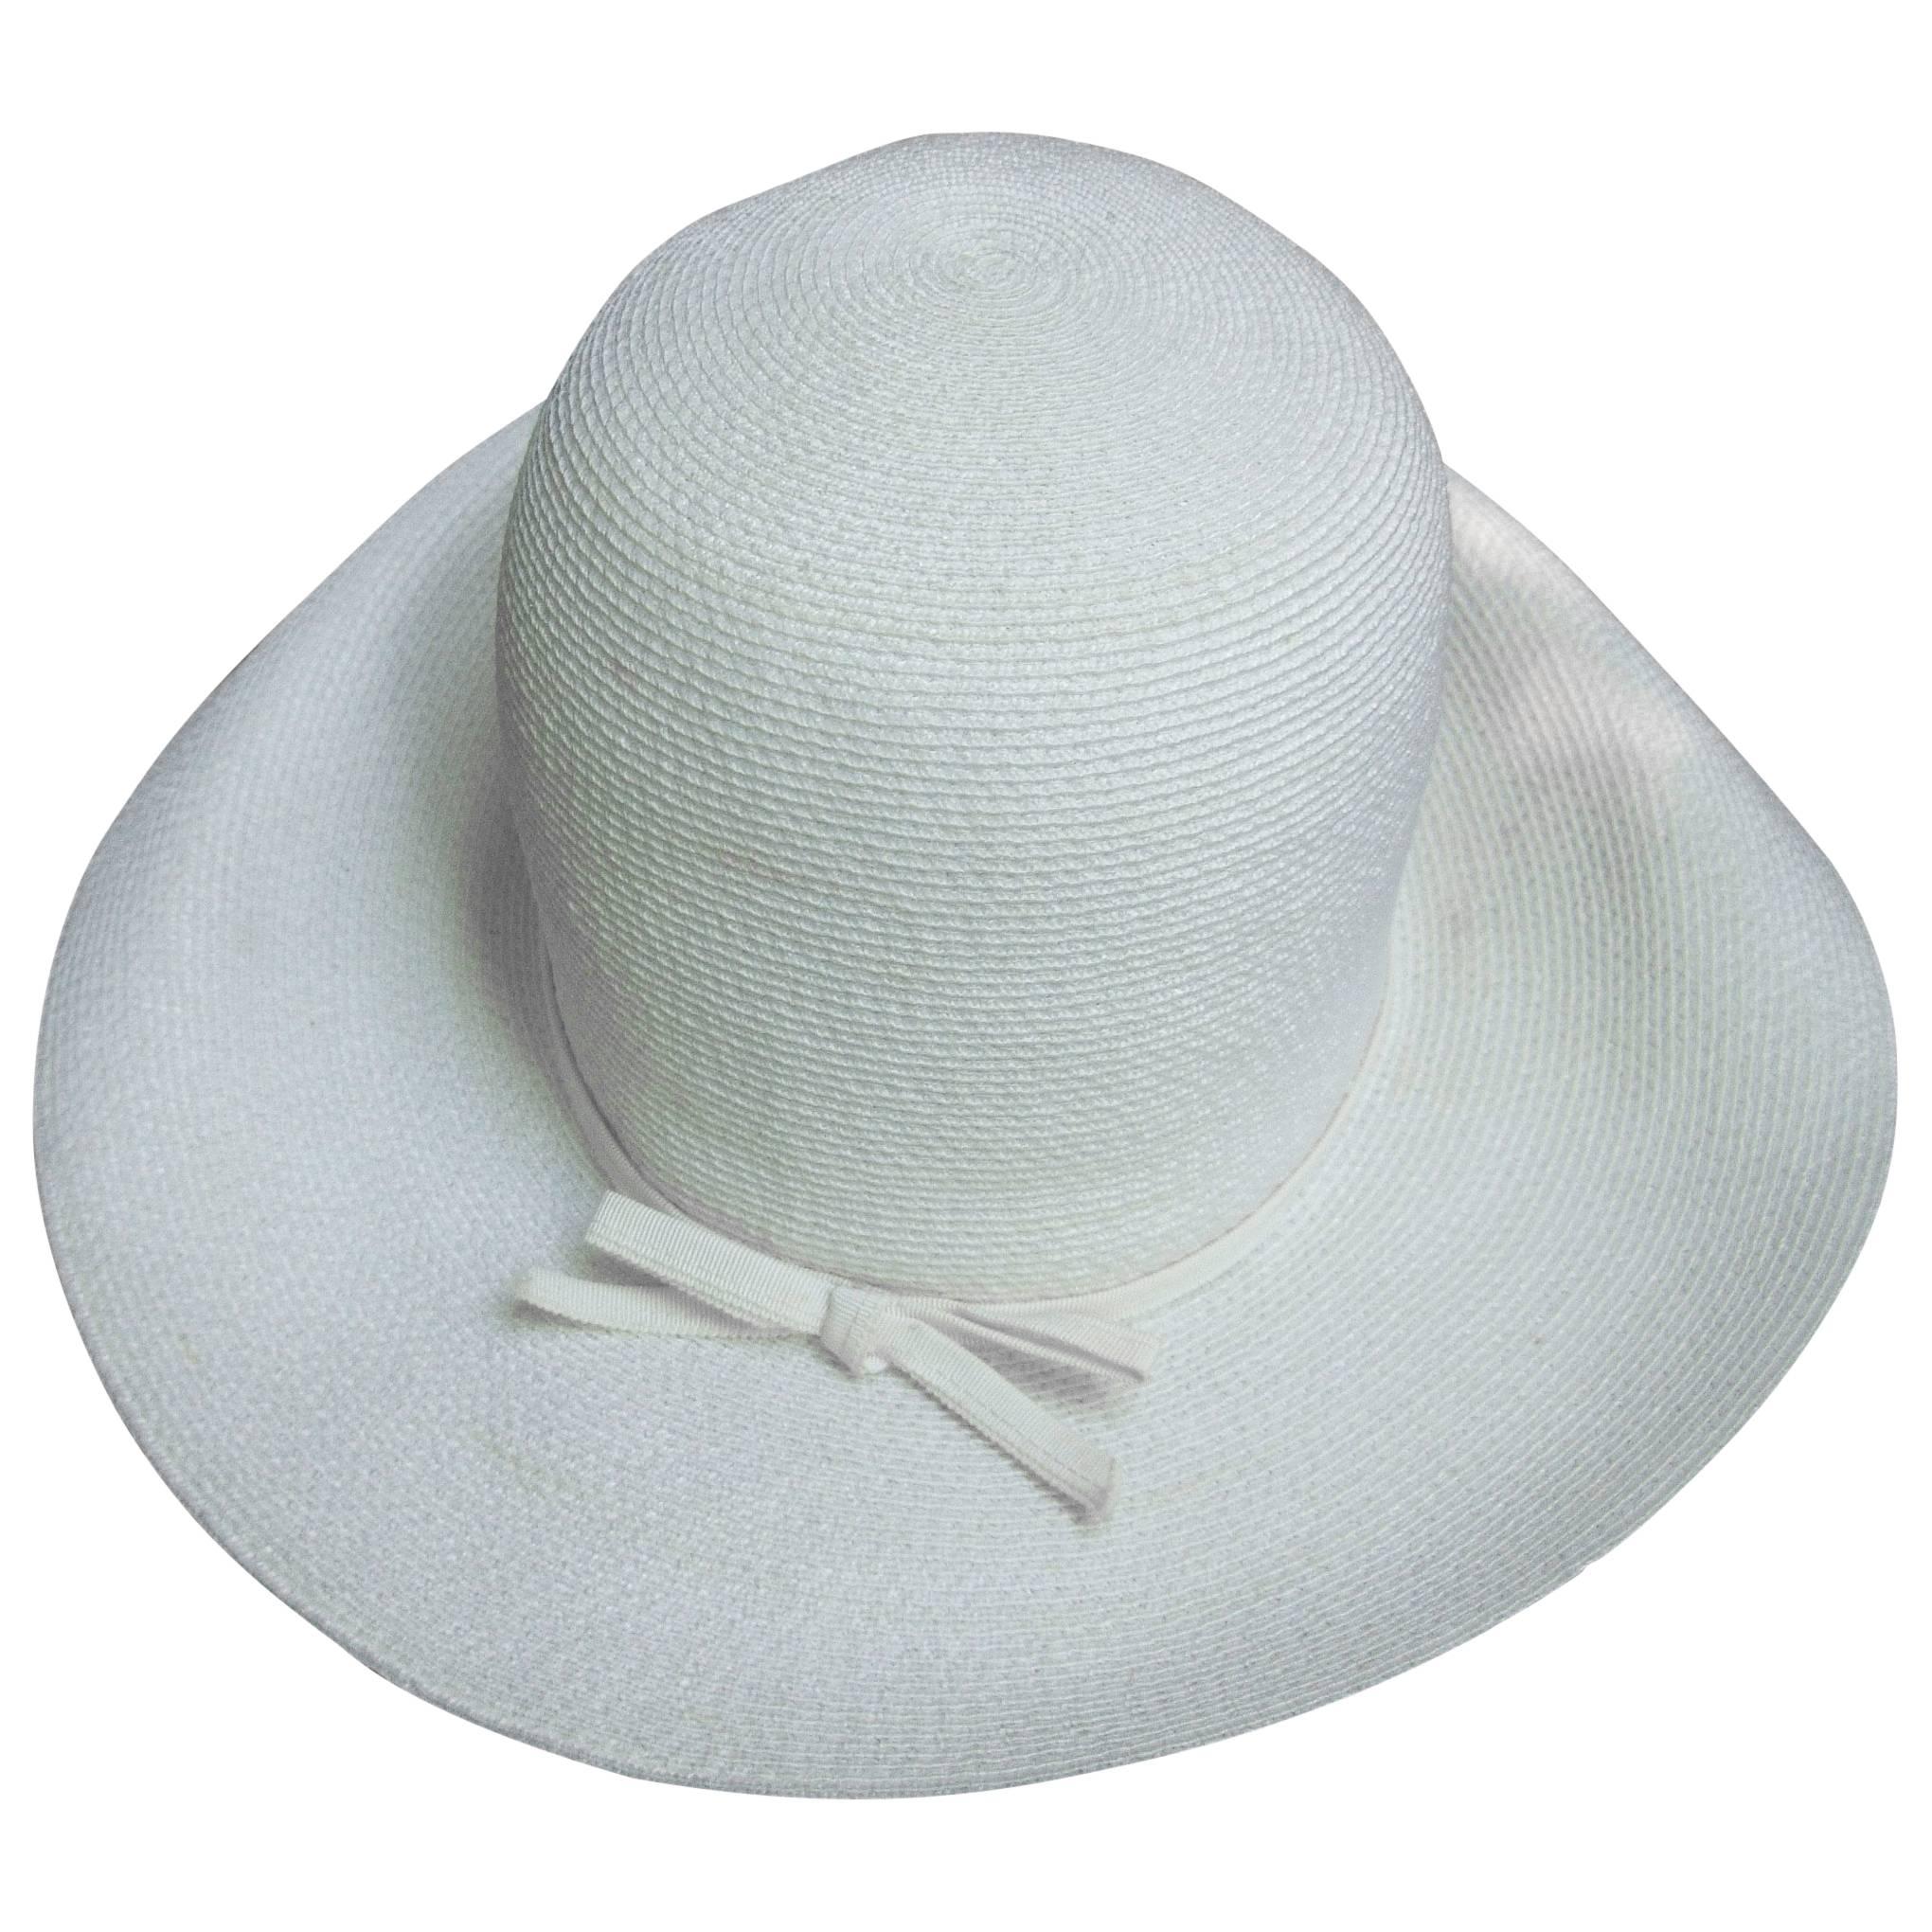 Saks Fifth Avenue Crisp White Raffia Summer Hat c 1970